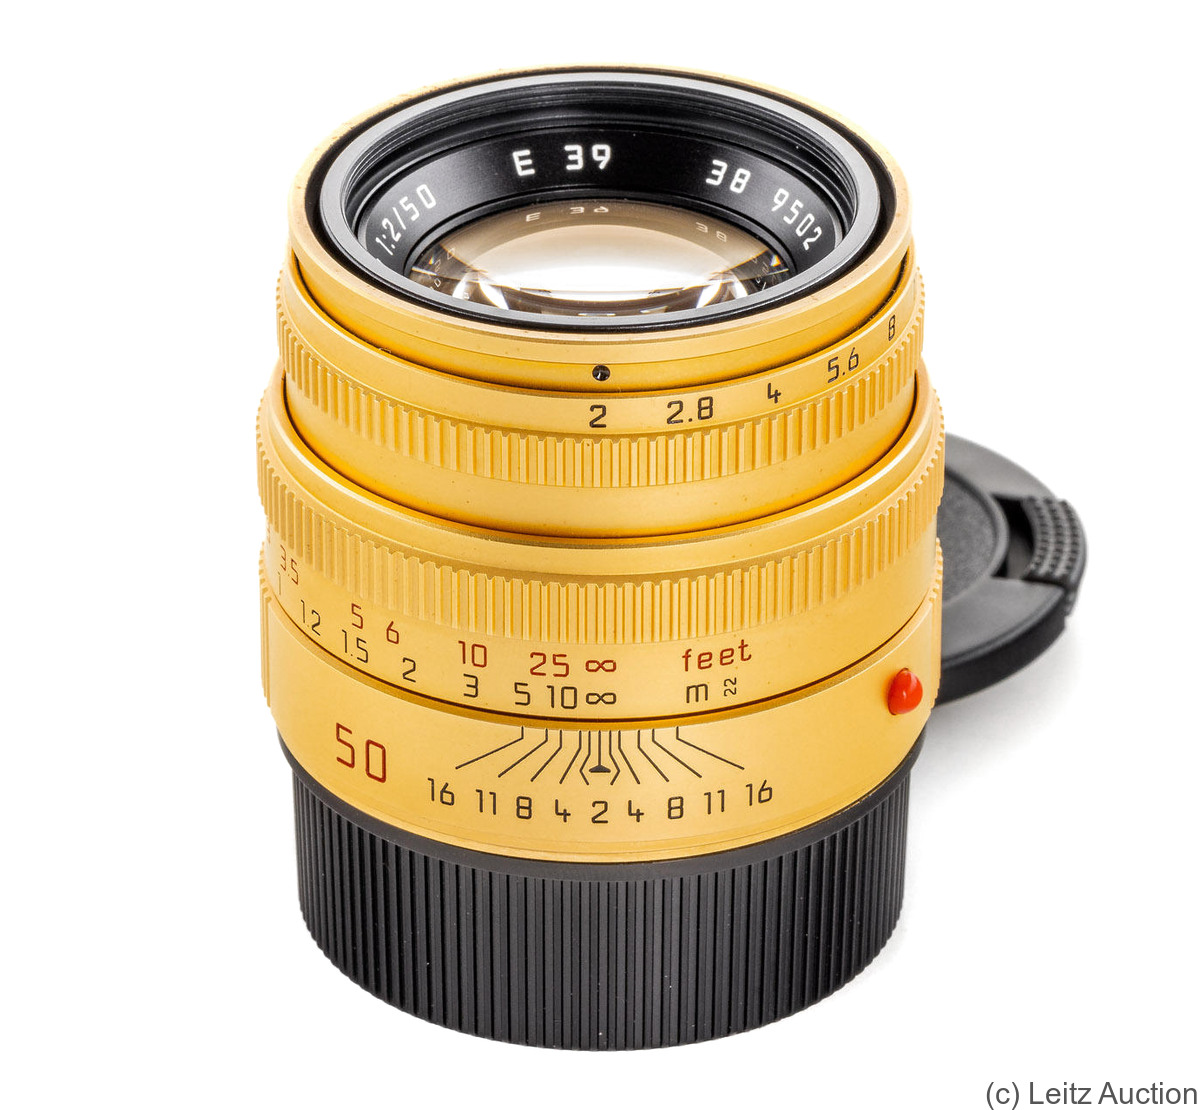 Leitz: 50mm (5cm) f2 Summicron-M (BM, gold, 11826) camera